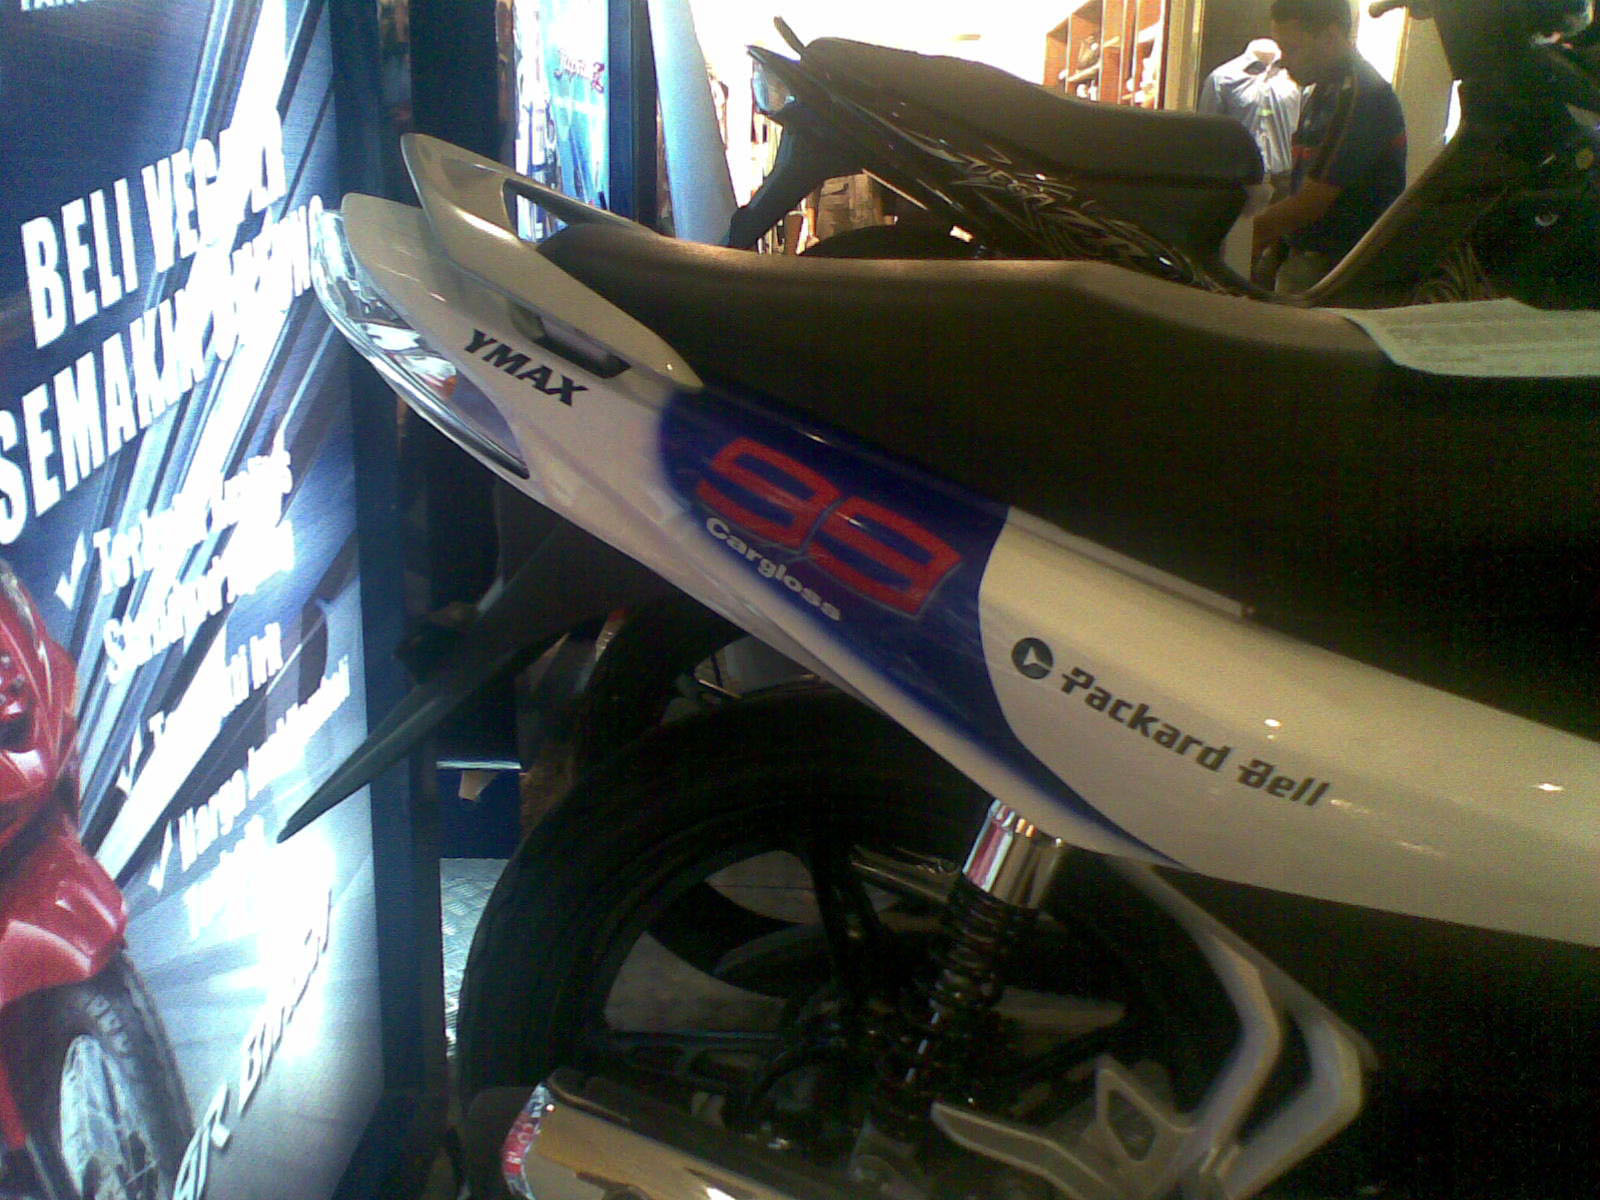 100 Modifikasi Motor Yamaha Jupiter Z 115cc Terbaru Kinyis Motor